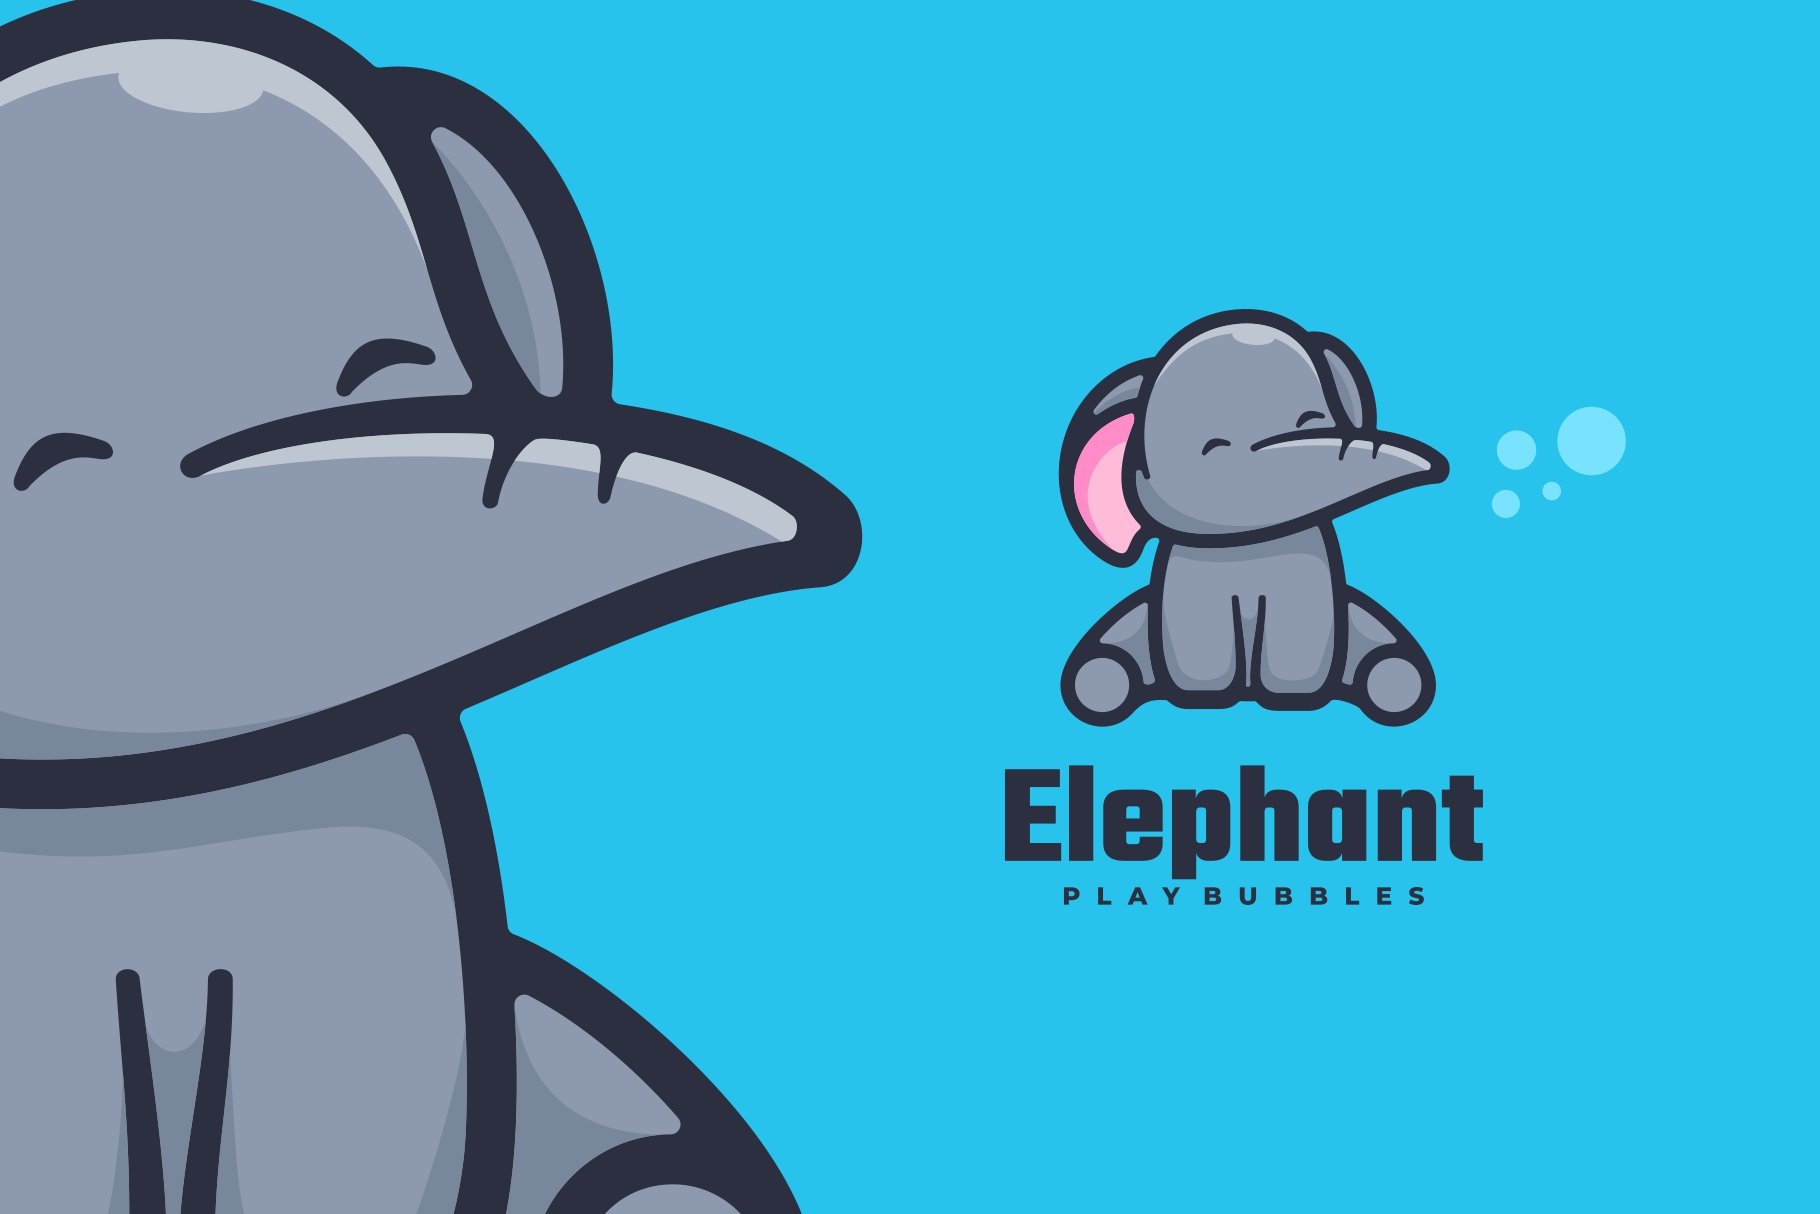 Elephant Simple Mascot Logo cover image.